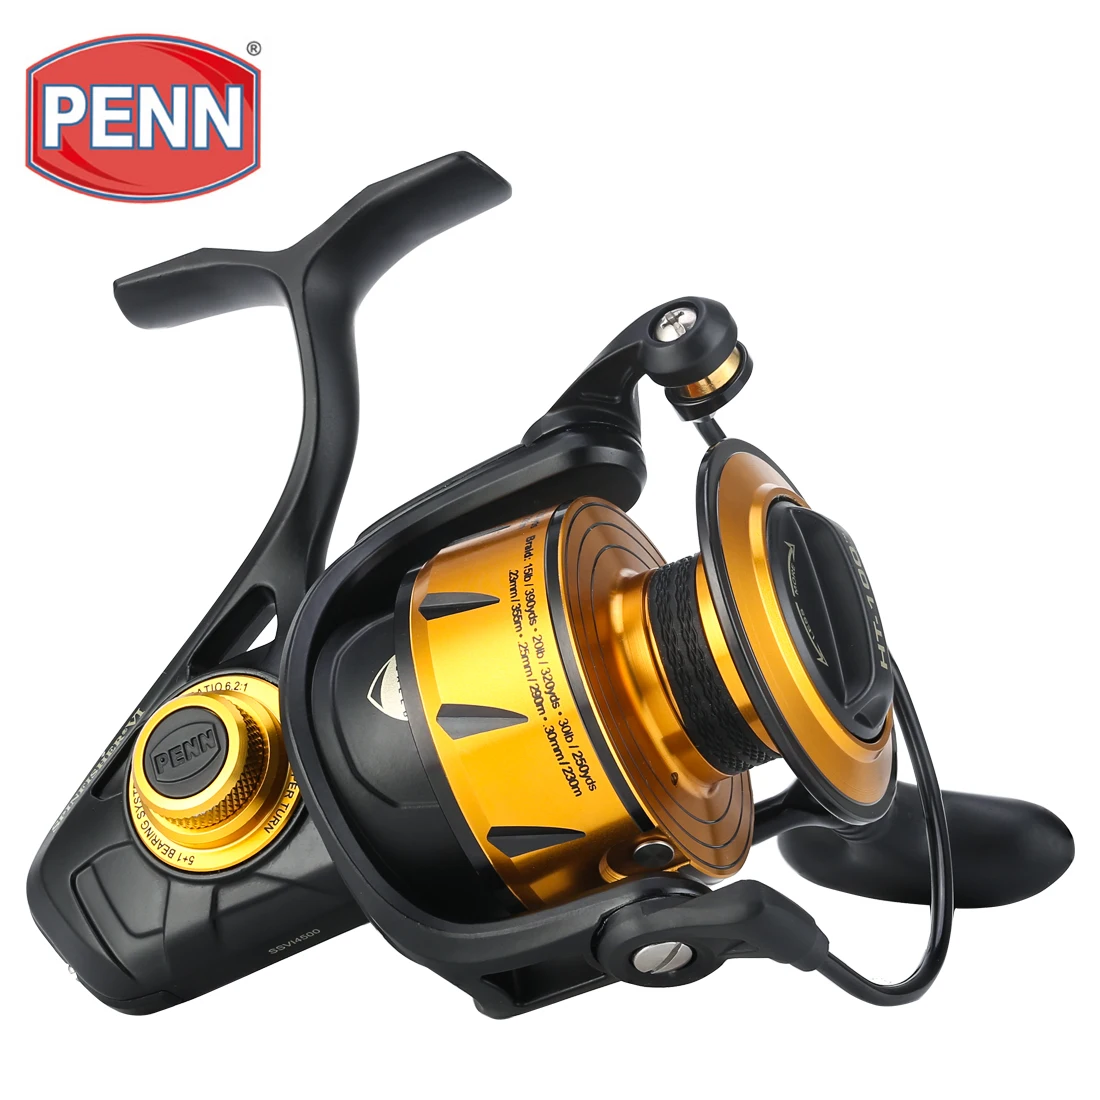 Penn Saltwater Reels for Fishing